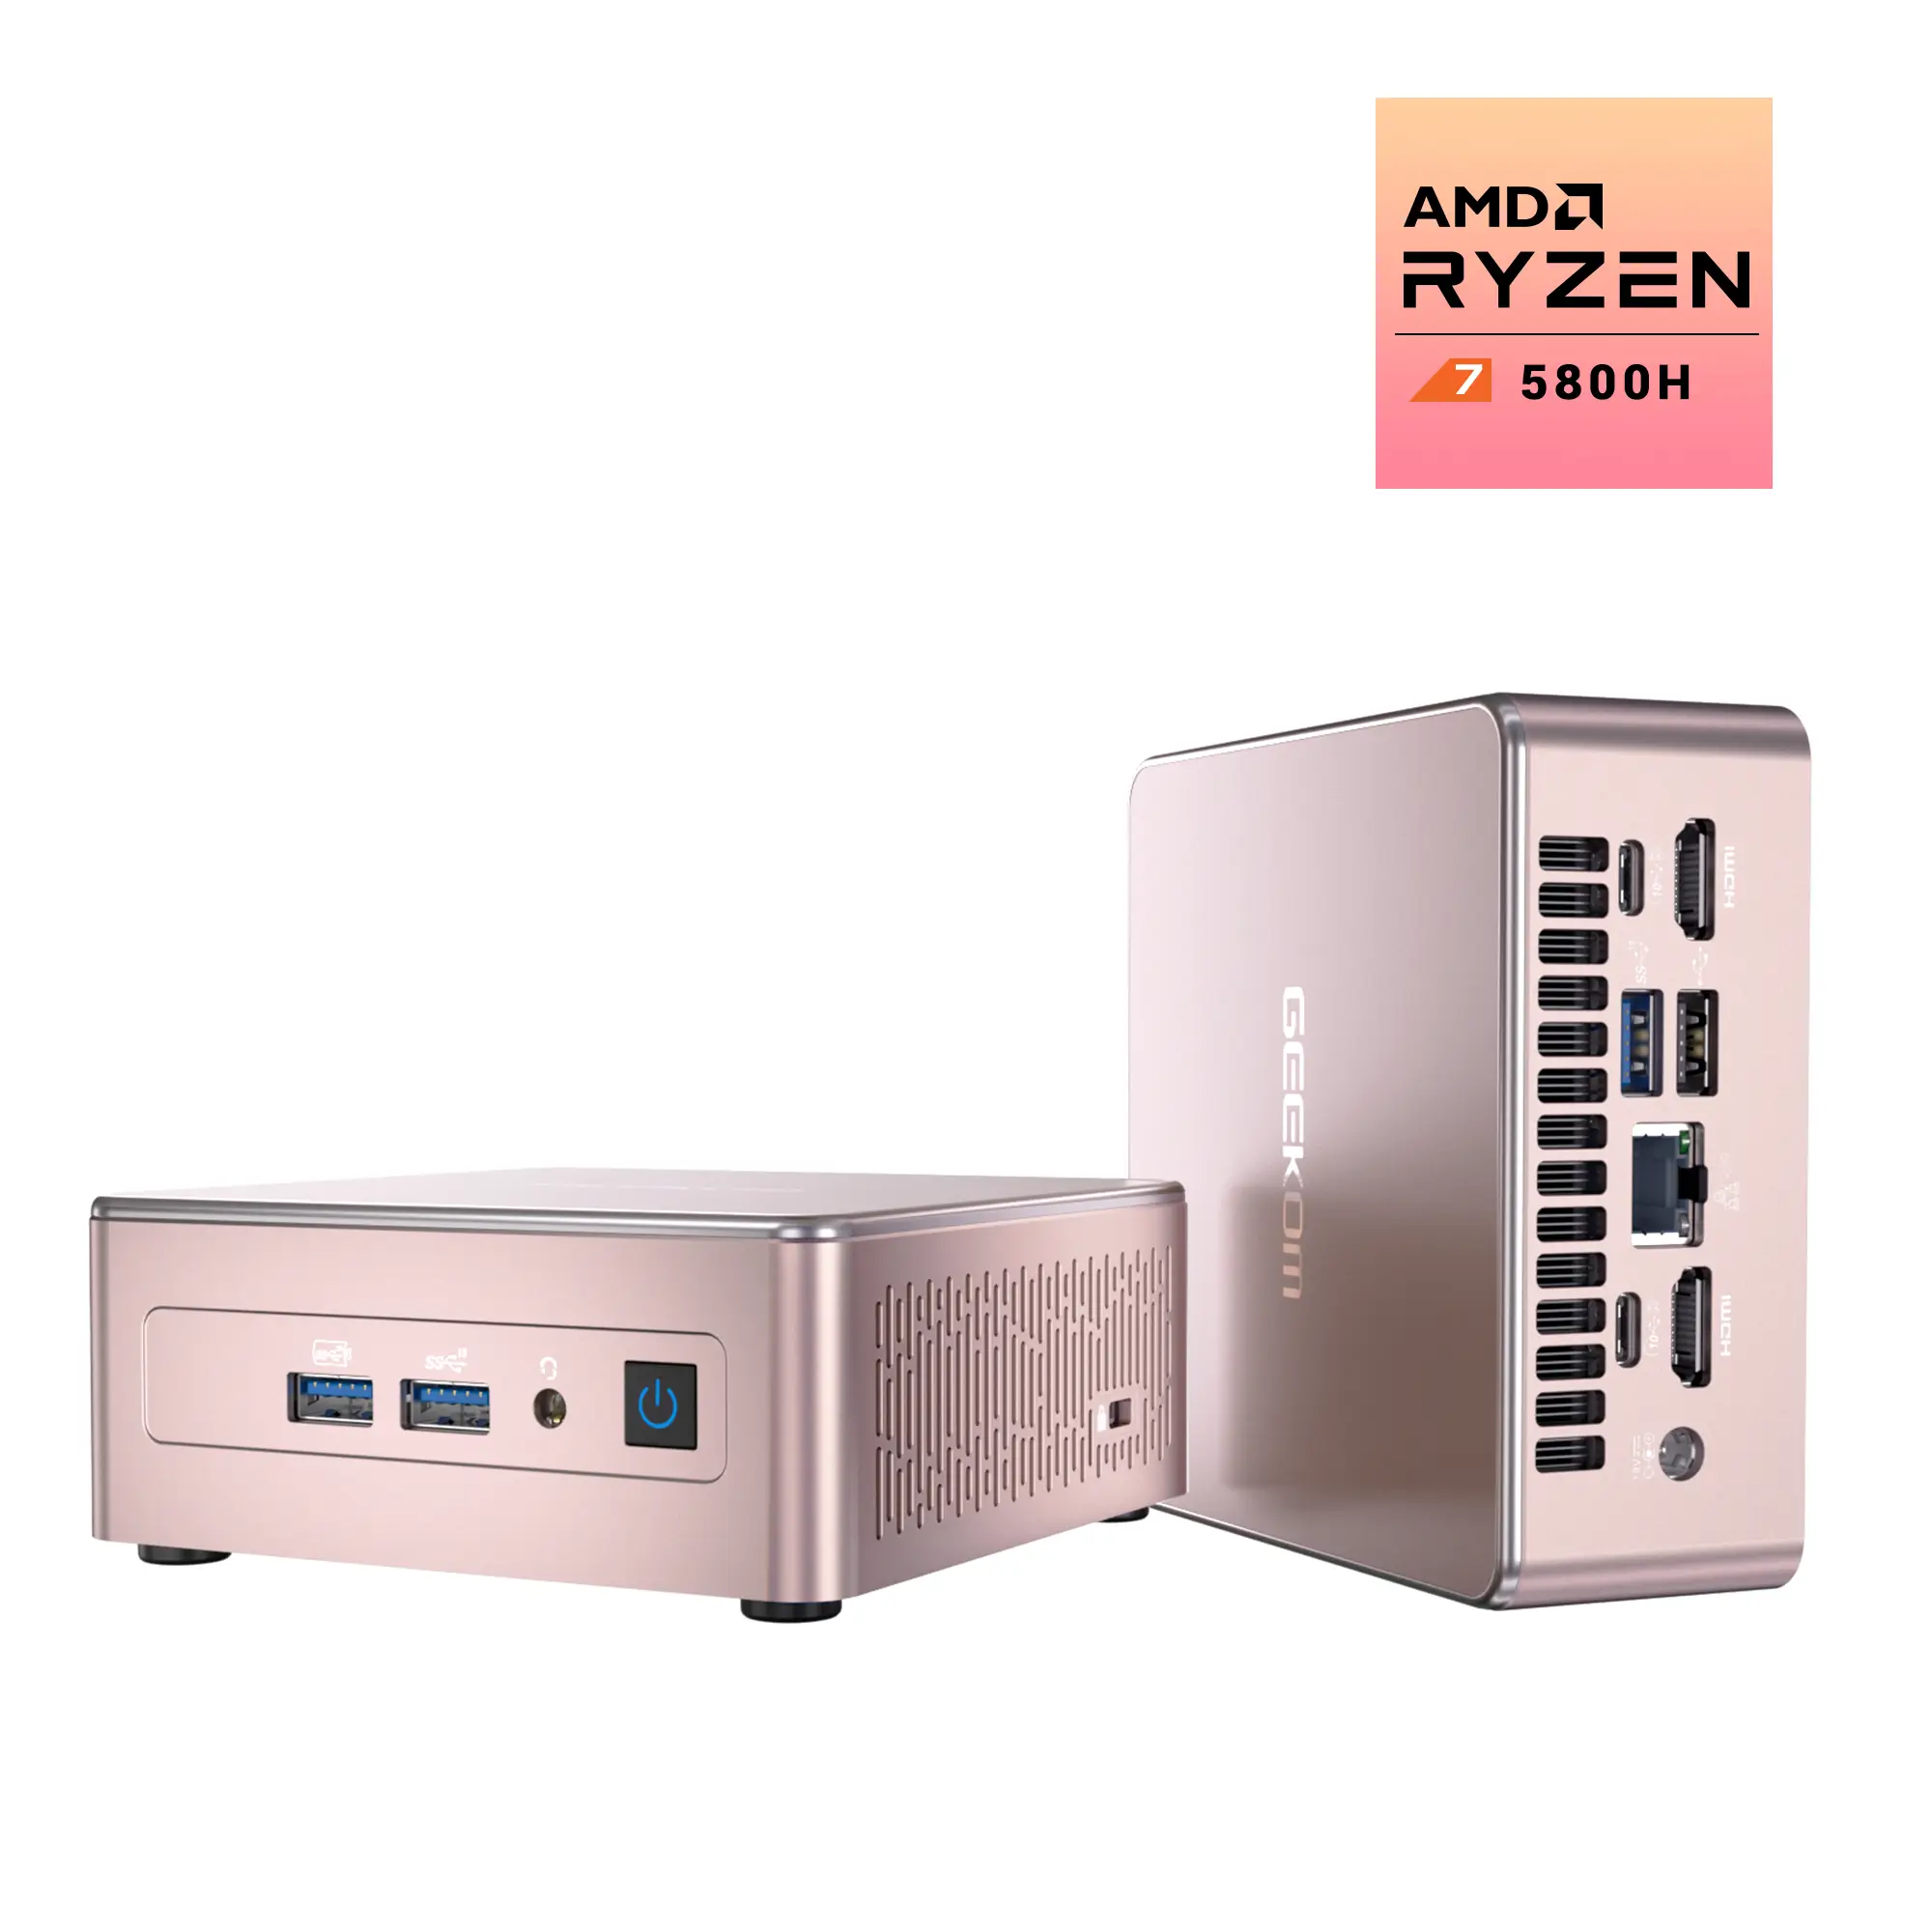  GEEKOM A5 Mini PC, AMD Ryzen 7 5800H(8C/16T, up to 4.4